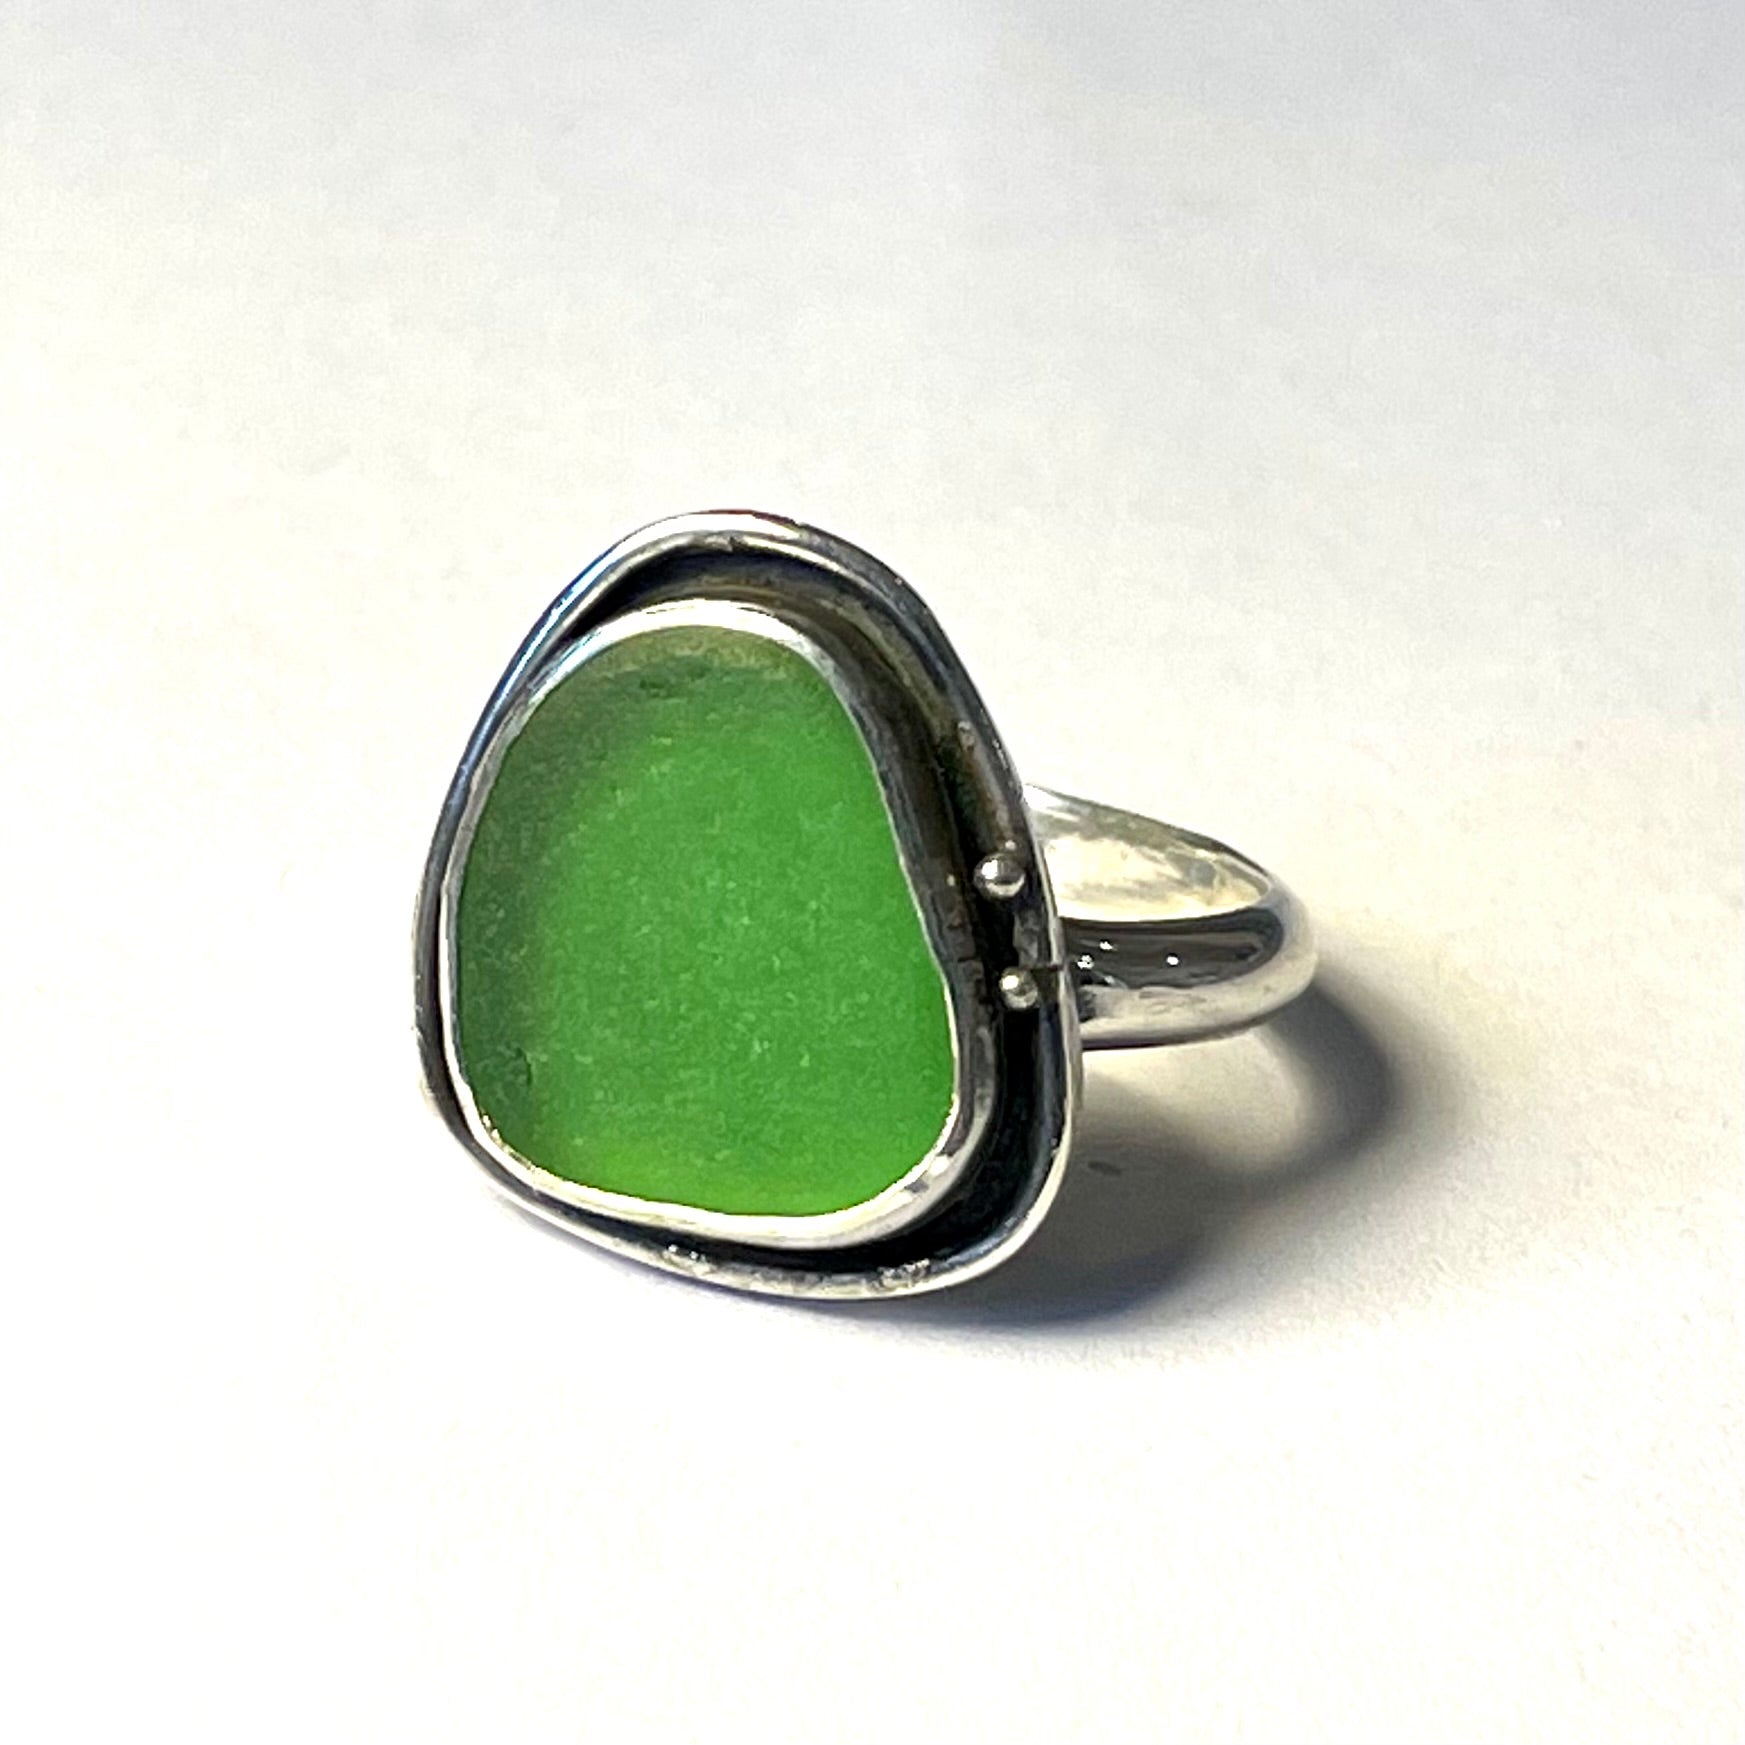 Green sea glass ring